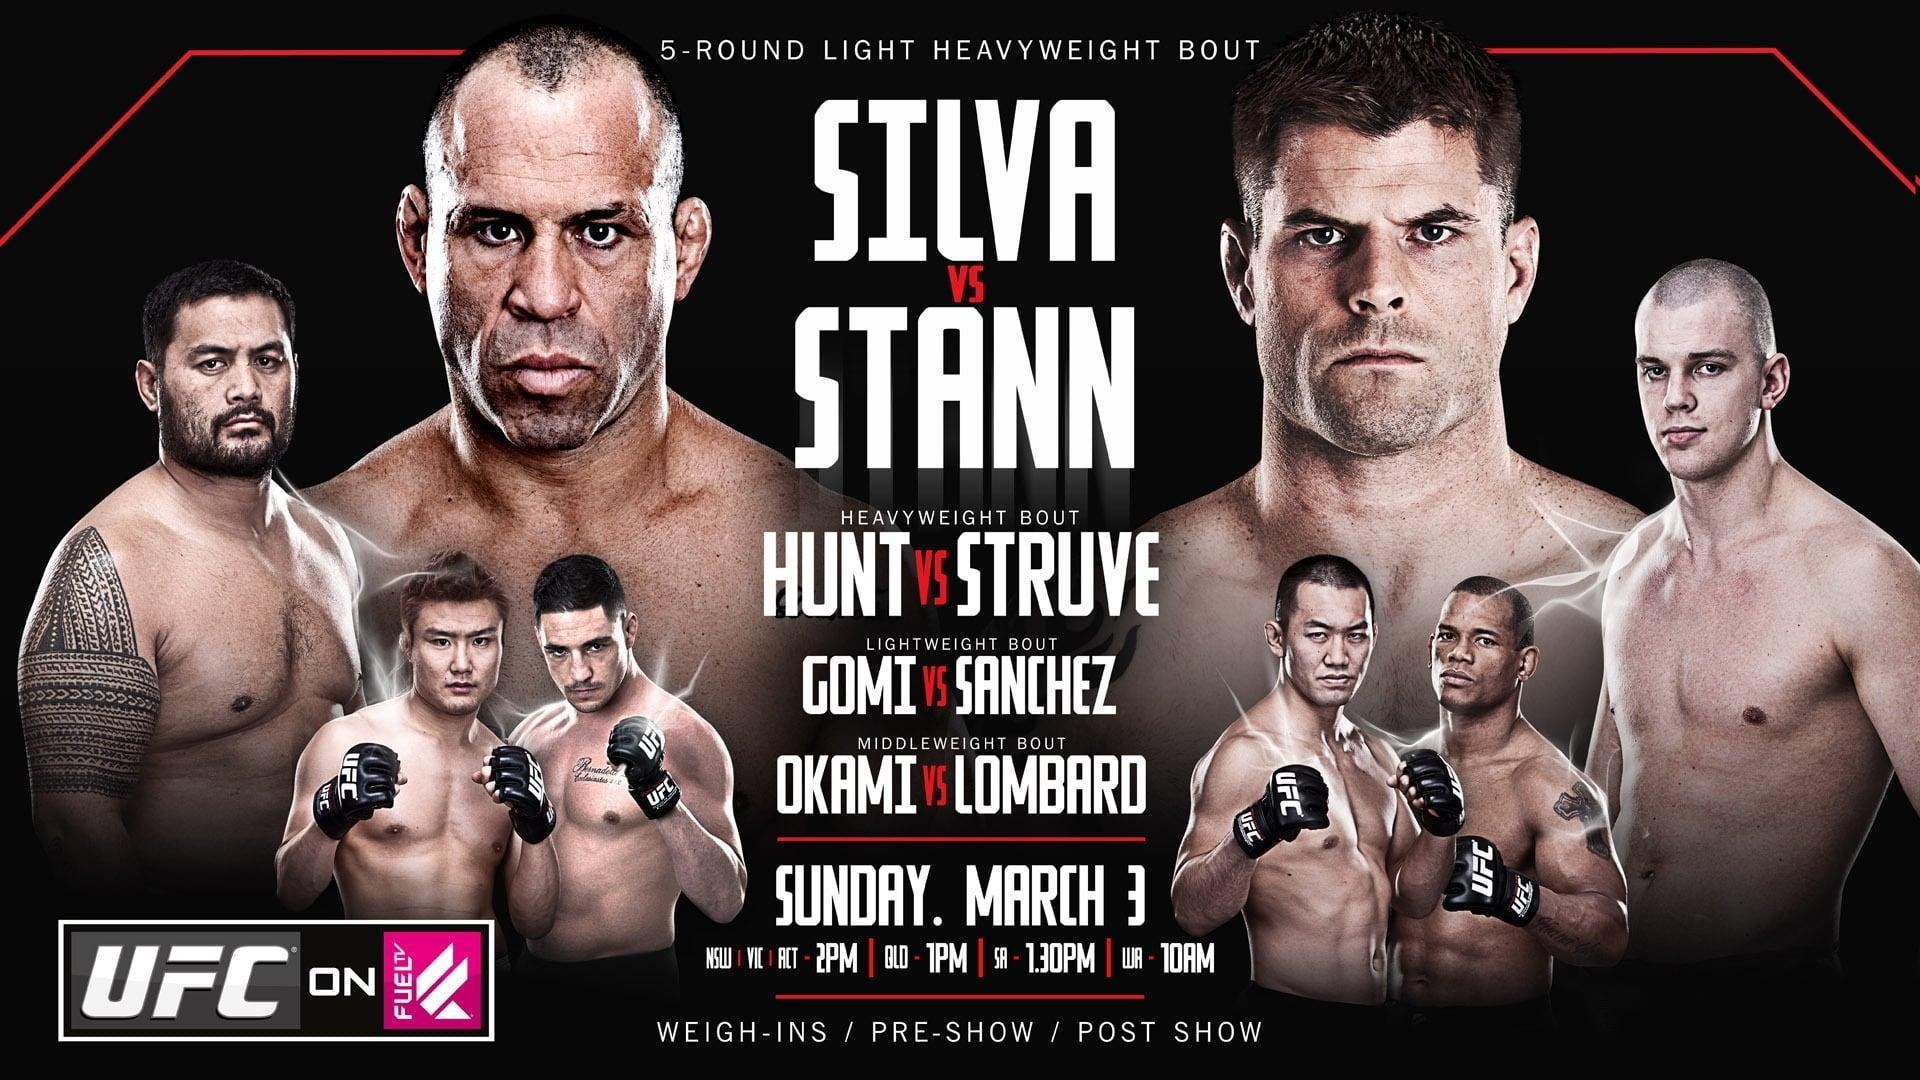 UFC on Fuel TV 8: Silva vs. Stann backdrop